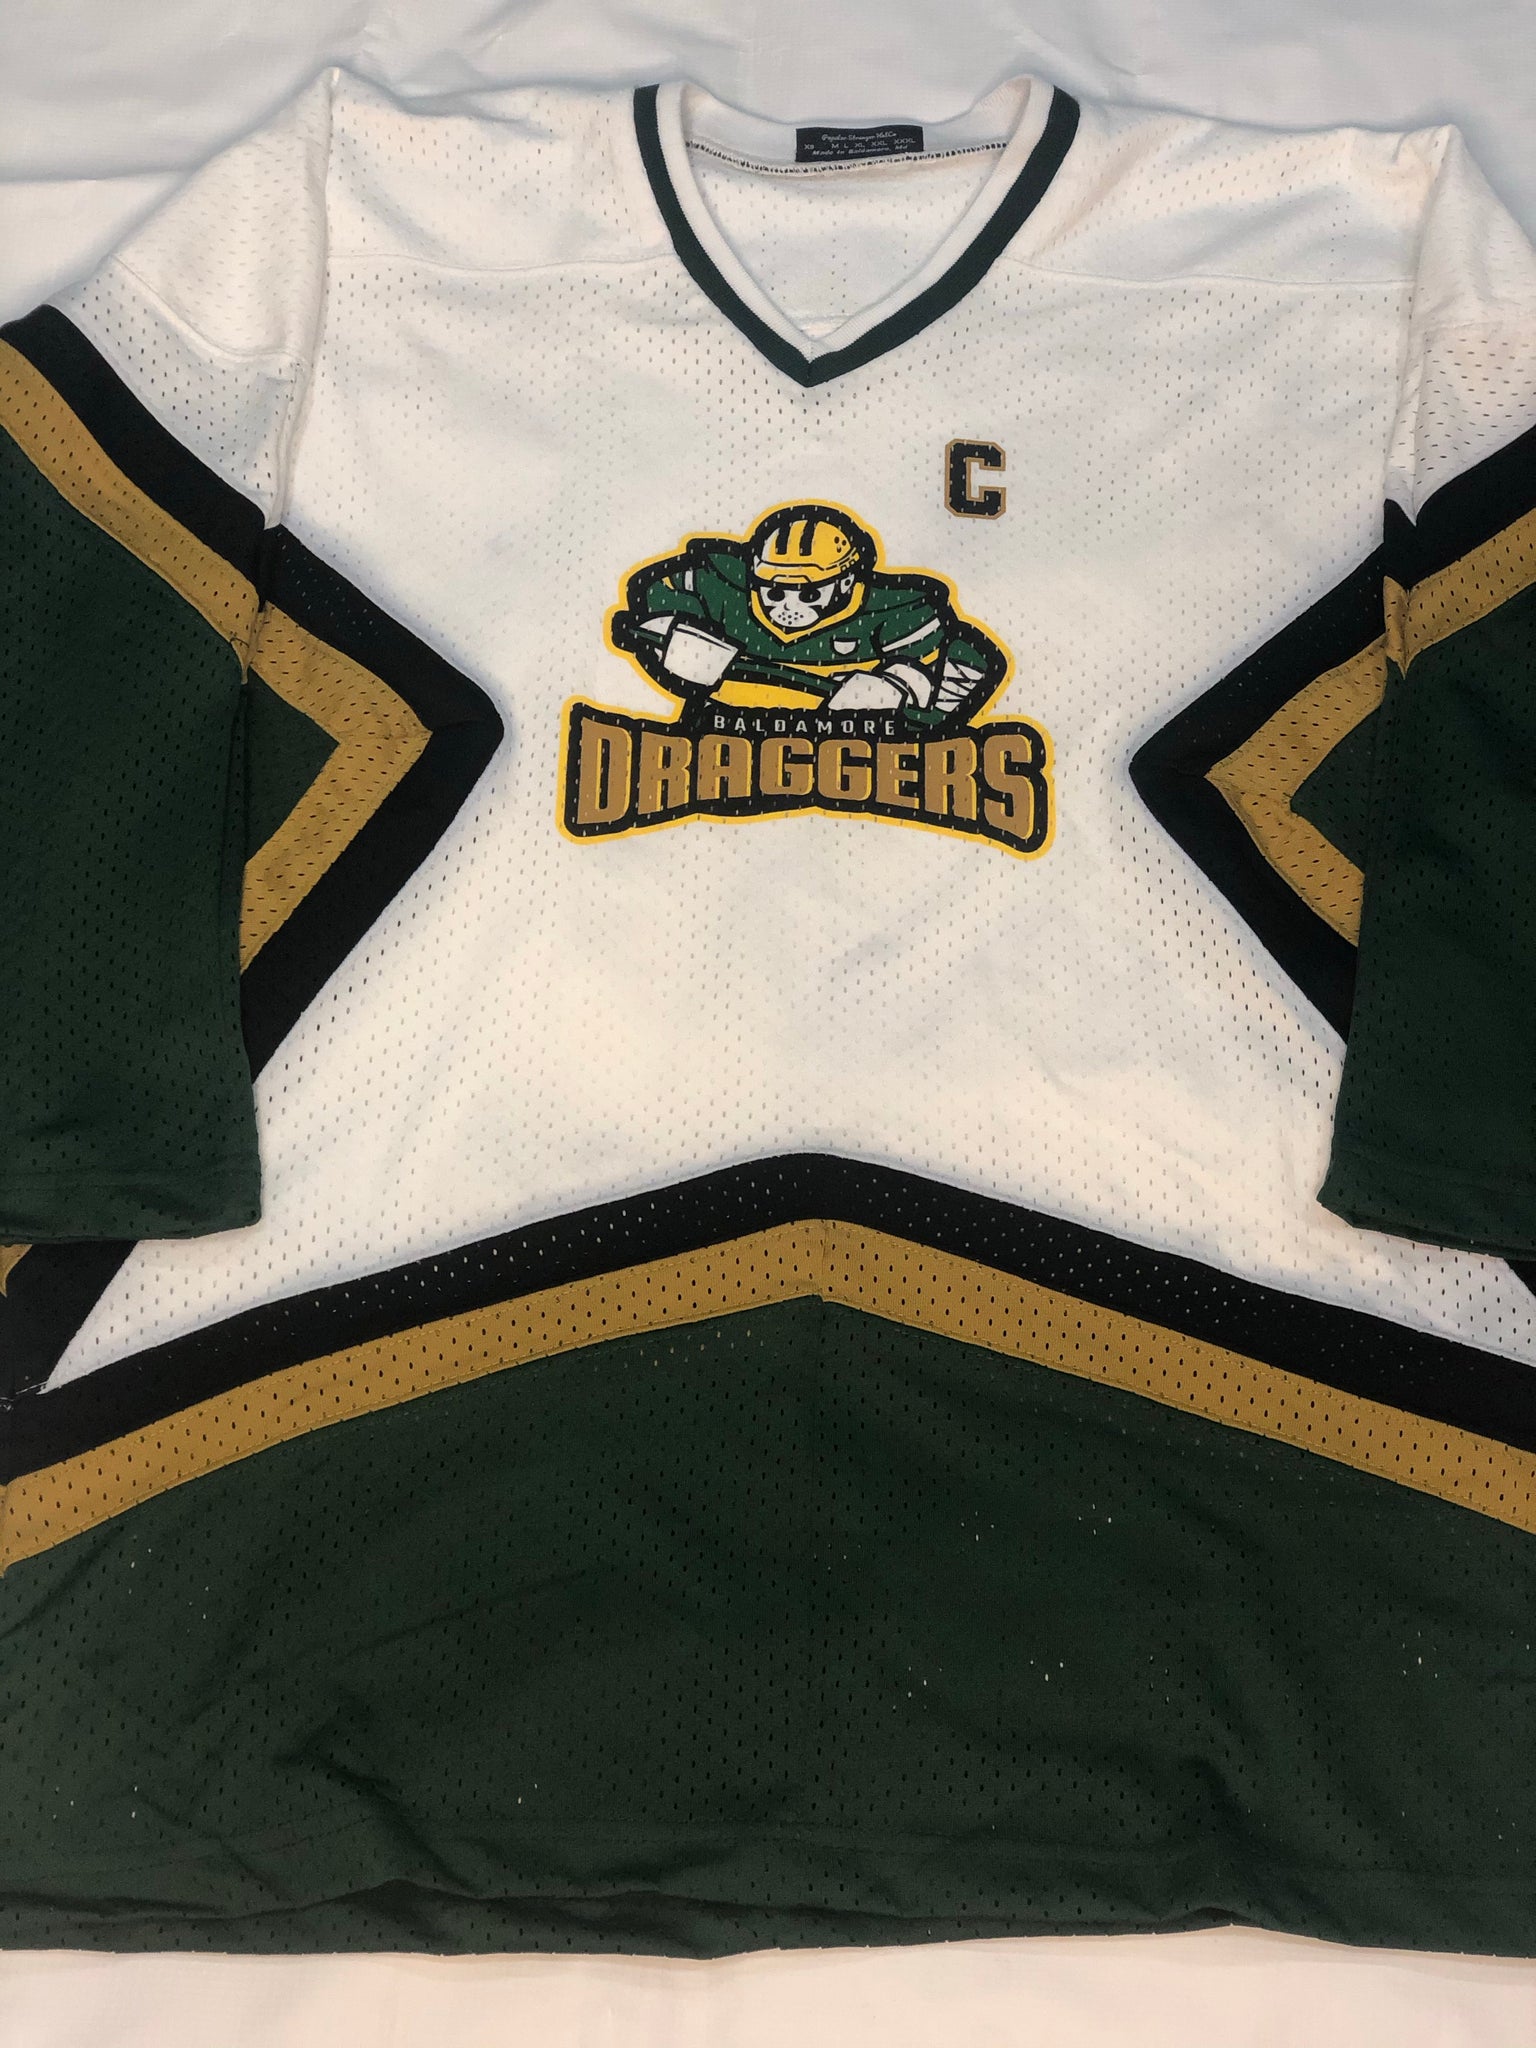 Baldamore “Dragger” hockey jersey